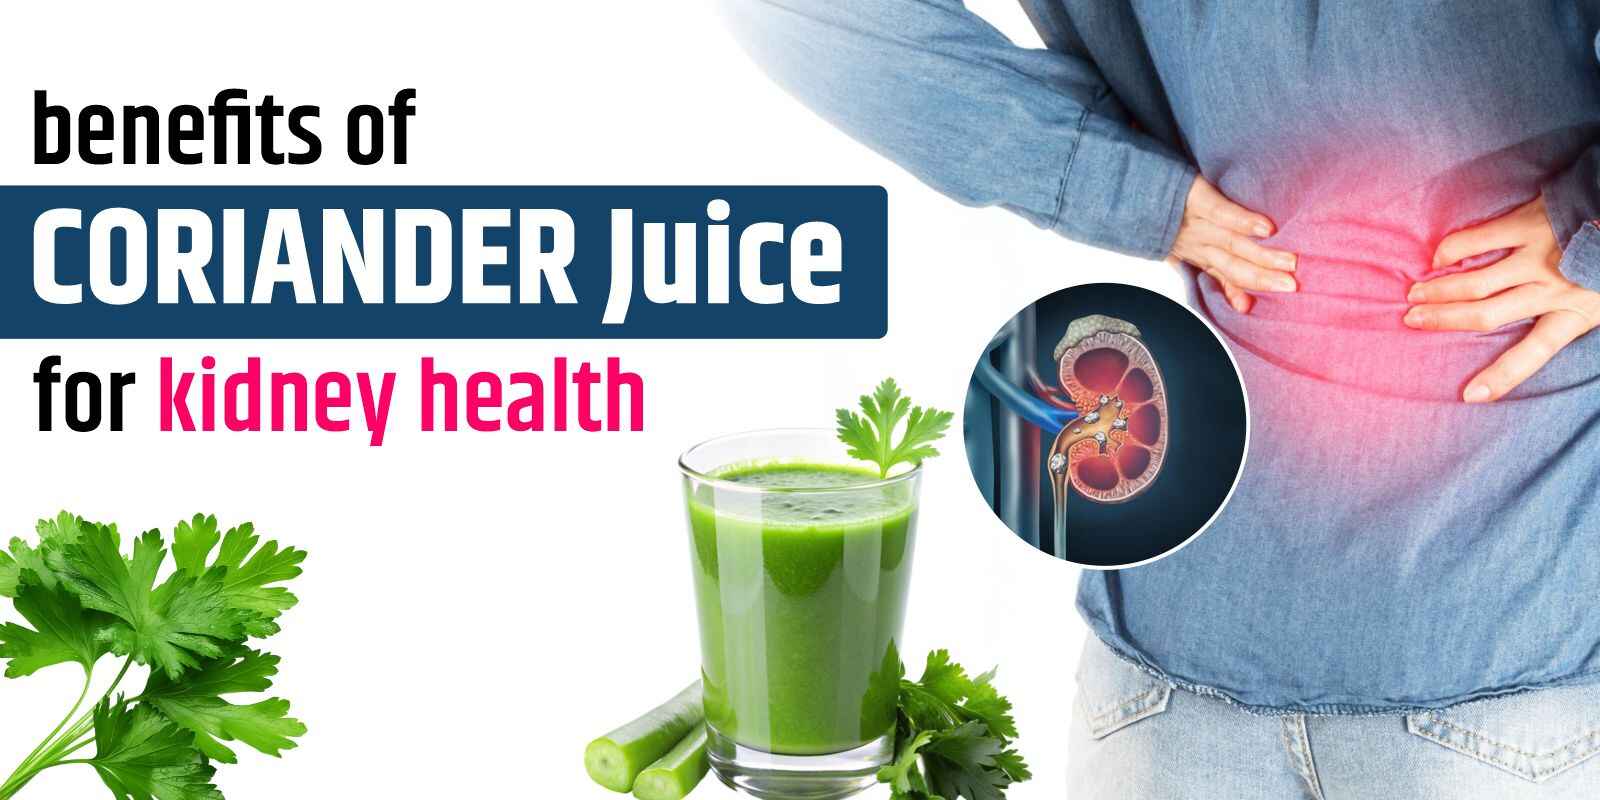 Benefits of coriander Juice for Kidney Disease – Detoxification is the Key!